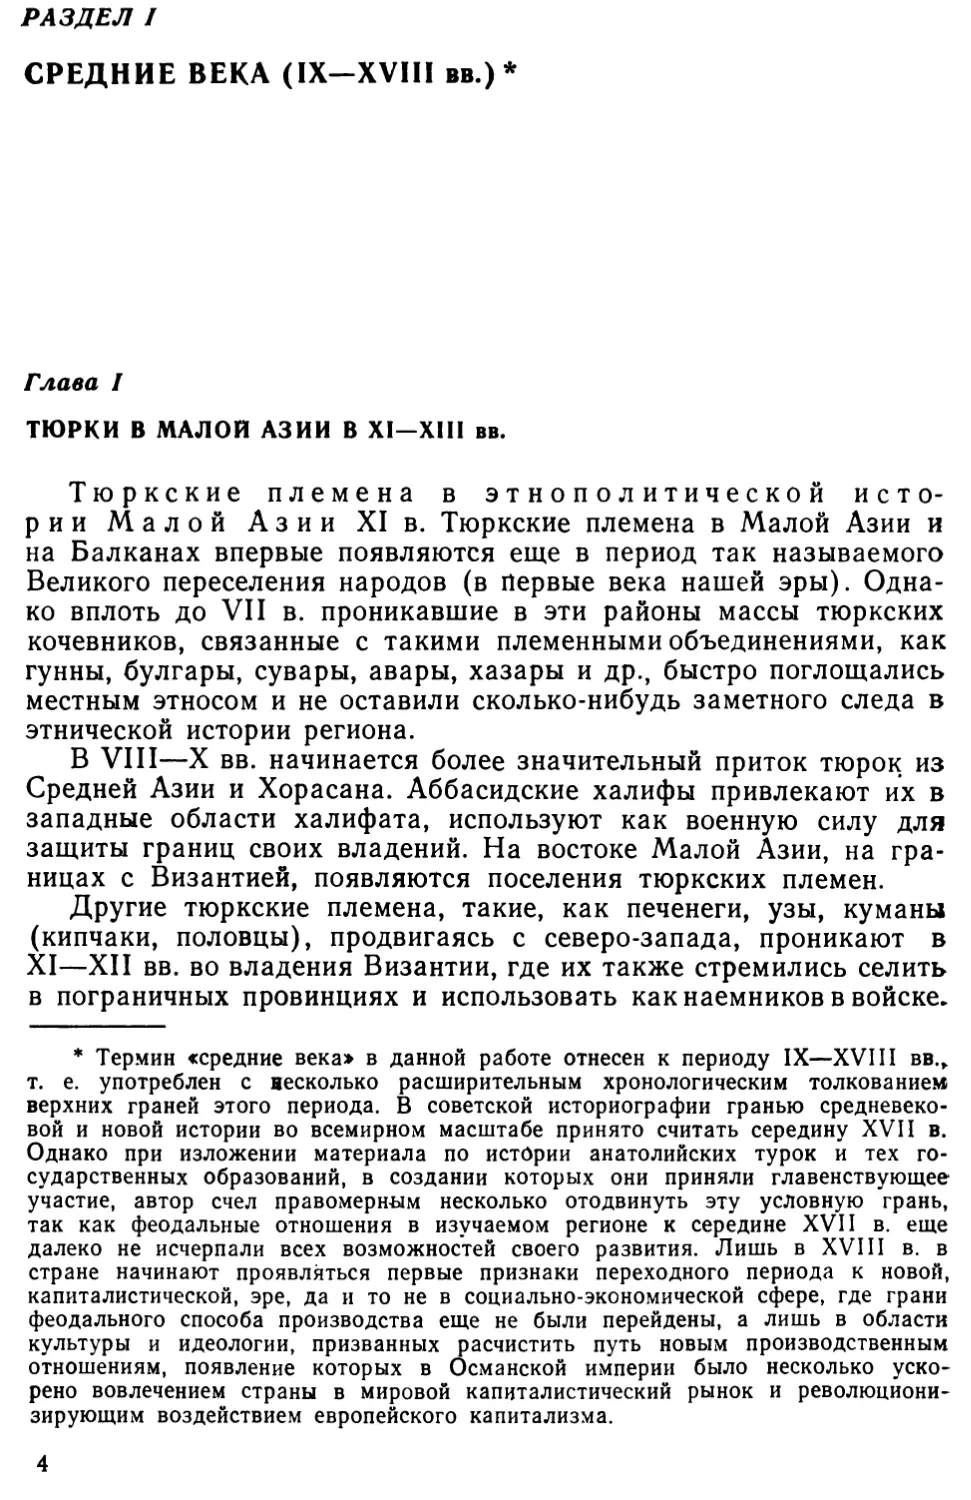 Глава I. Тюрки в Малой Азии в XI—XIII вв.